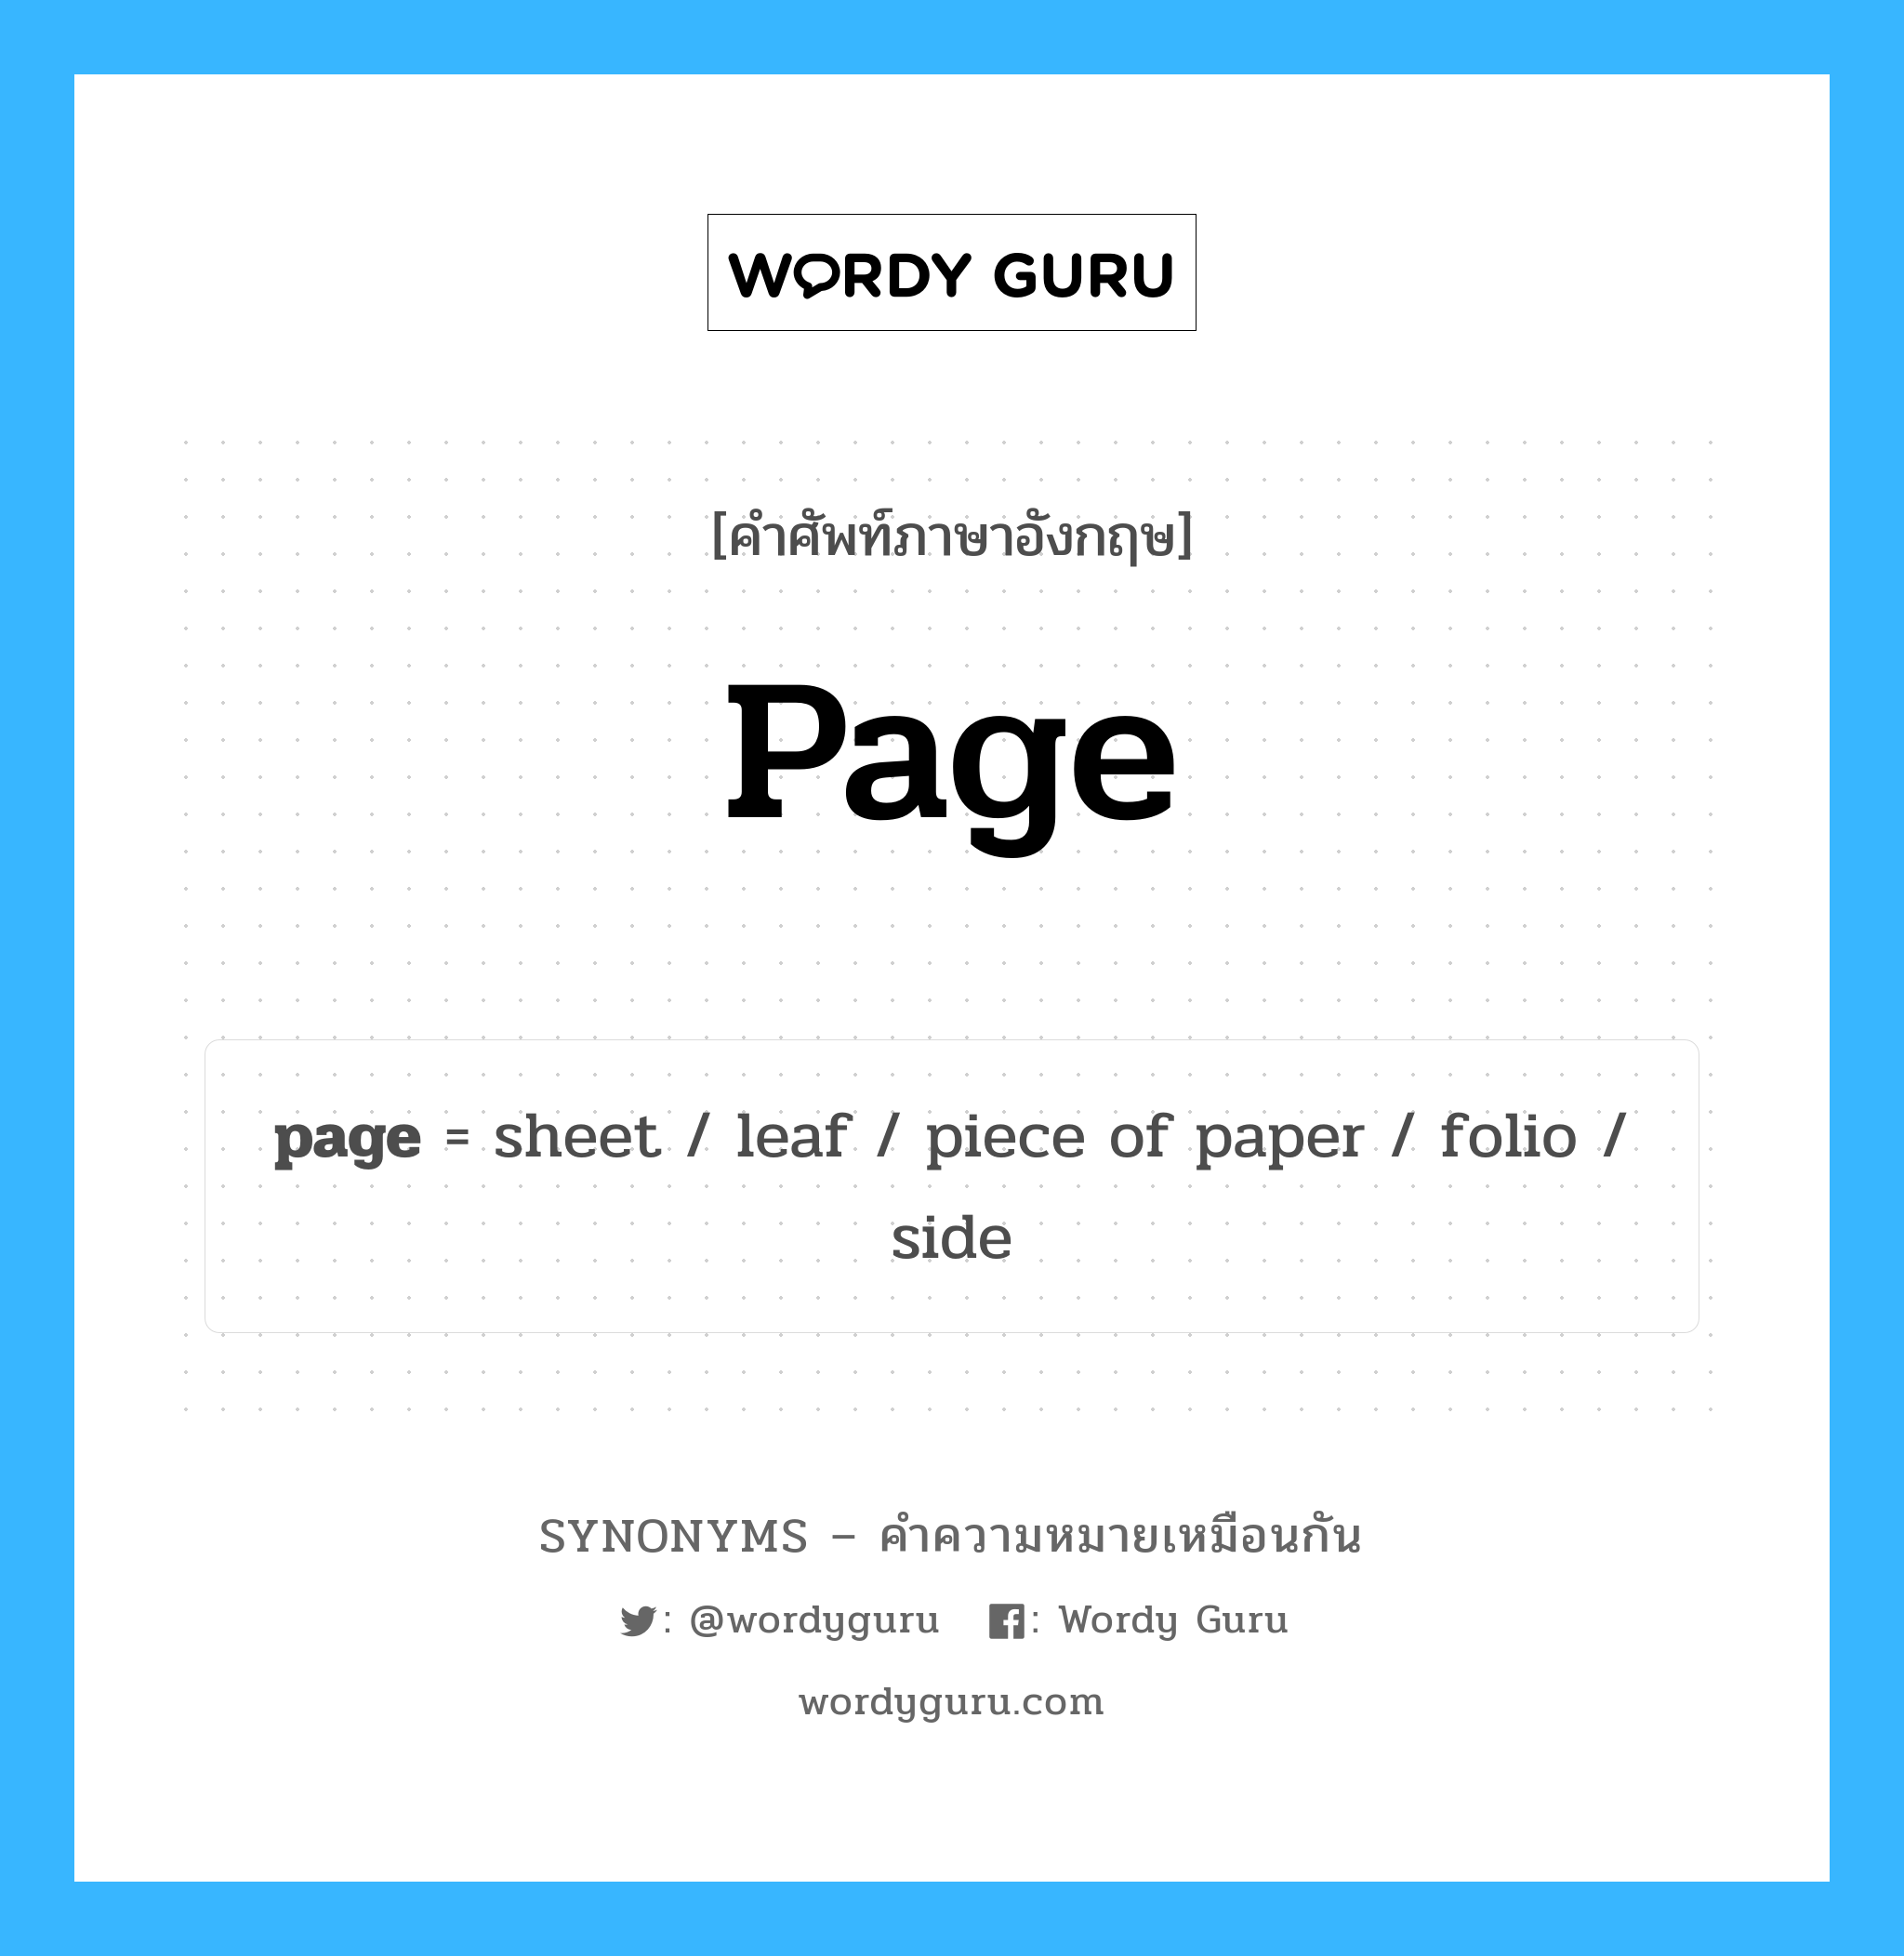 side เป็นหนึ่งใน page และมีคำอื่น ๆ อีกดังนี้, คำศัพท์ภาษาอังกฤษ side ความหมายคล้ายกันกับ page แปลว่า ด้านข้าง หมวด page